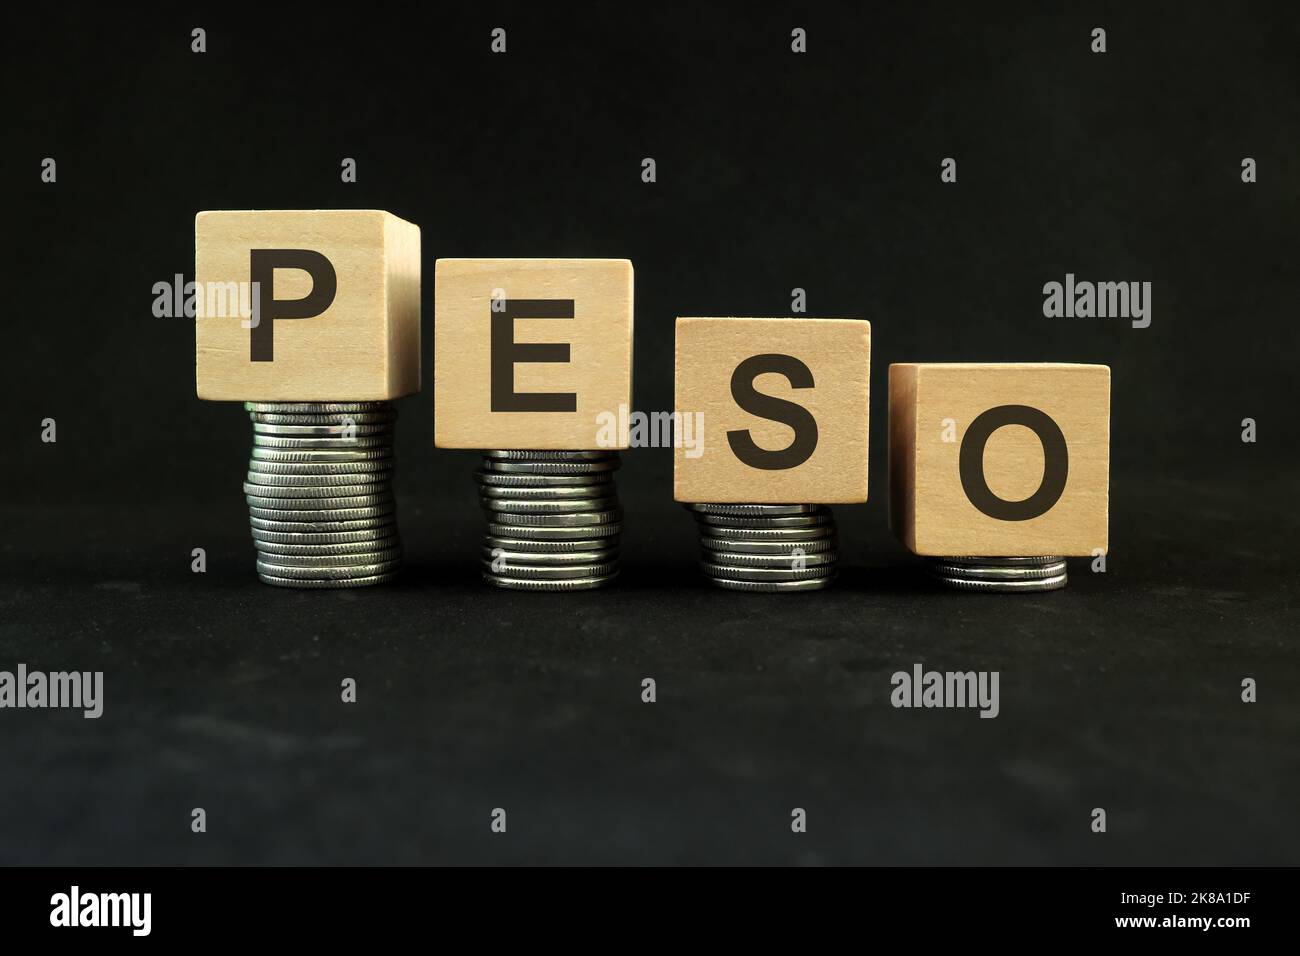 Philippine peso weakening, value depreciation and devaluation concept. Decreasing stack of coins on dark black background. Stock Photo